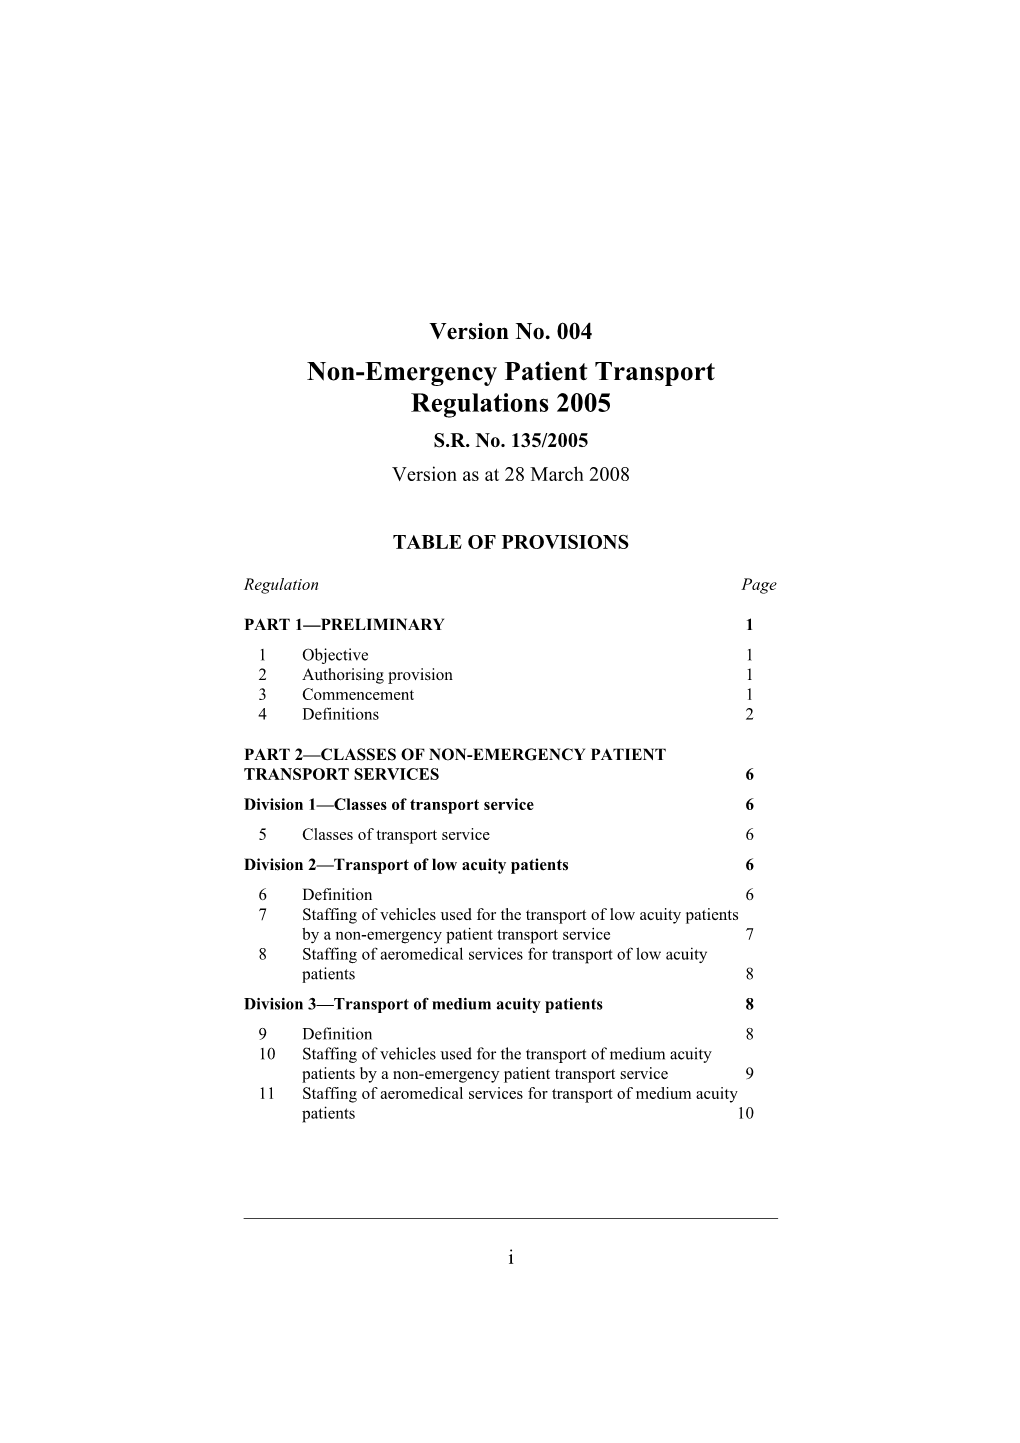 Non-Emergency Patient Transport Regulations 2005